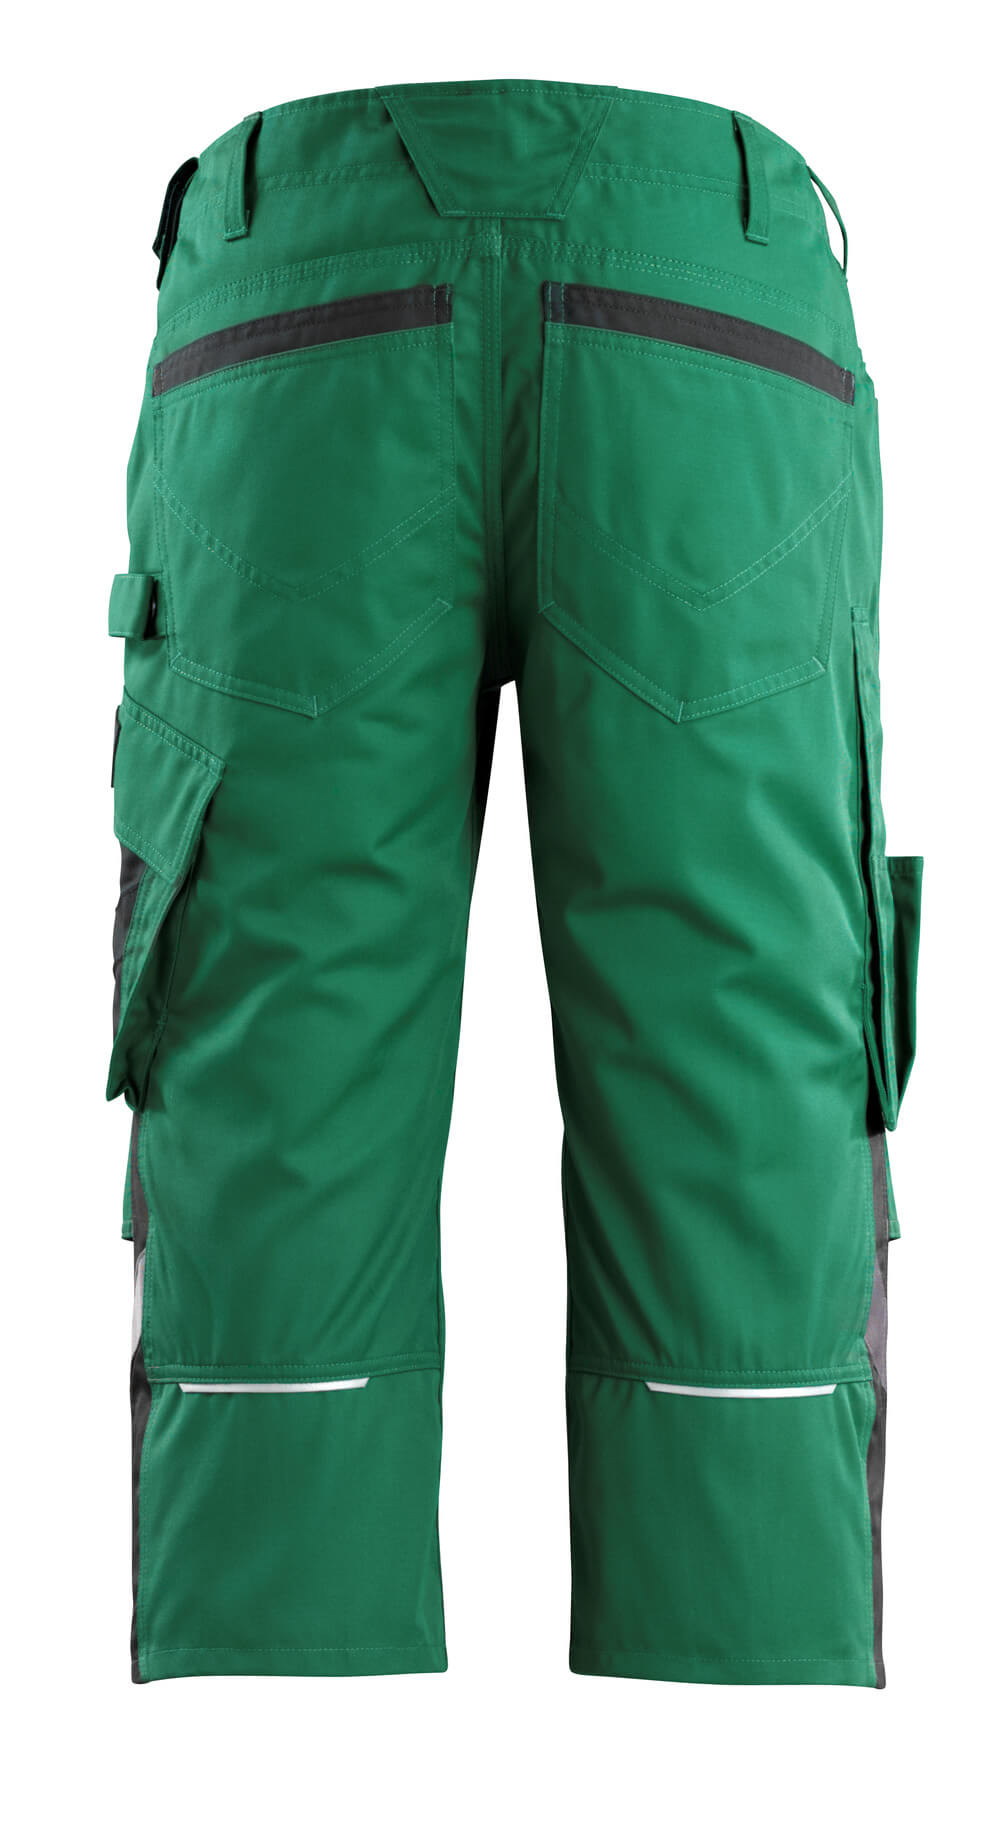 Mascot UNIQUE  Altona ¾ Length Trousers with kneepad pockets 14149 green/black